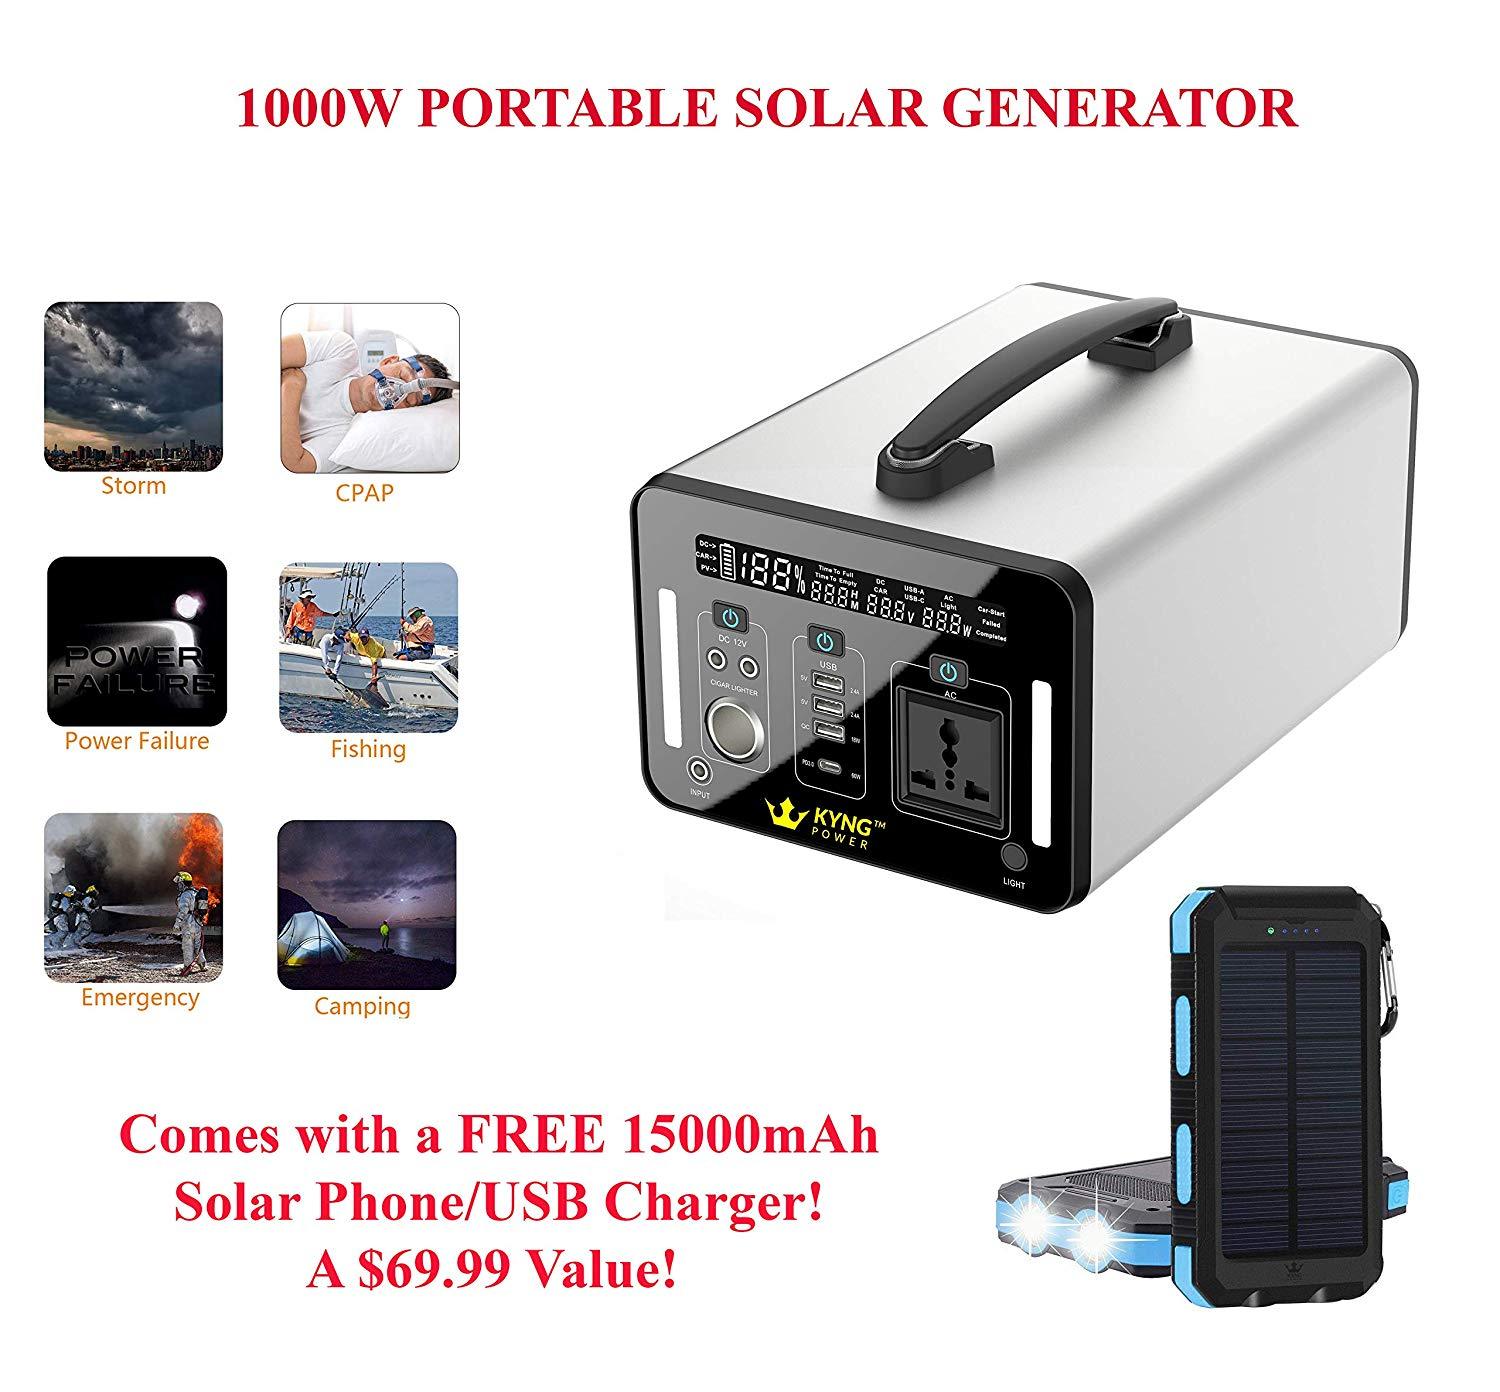 Kyng Power 1000W Solar Generator Portable Power Station New